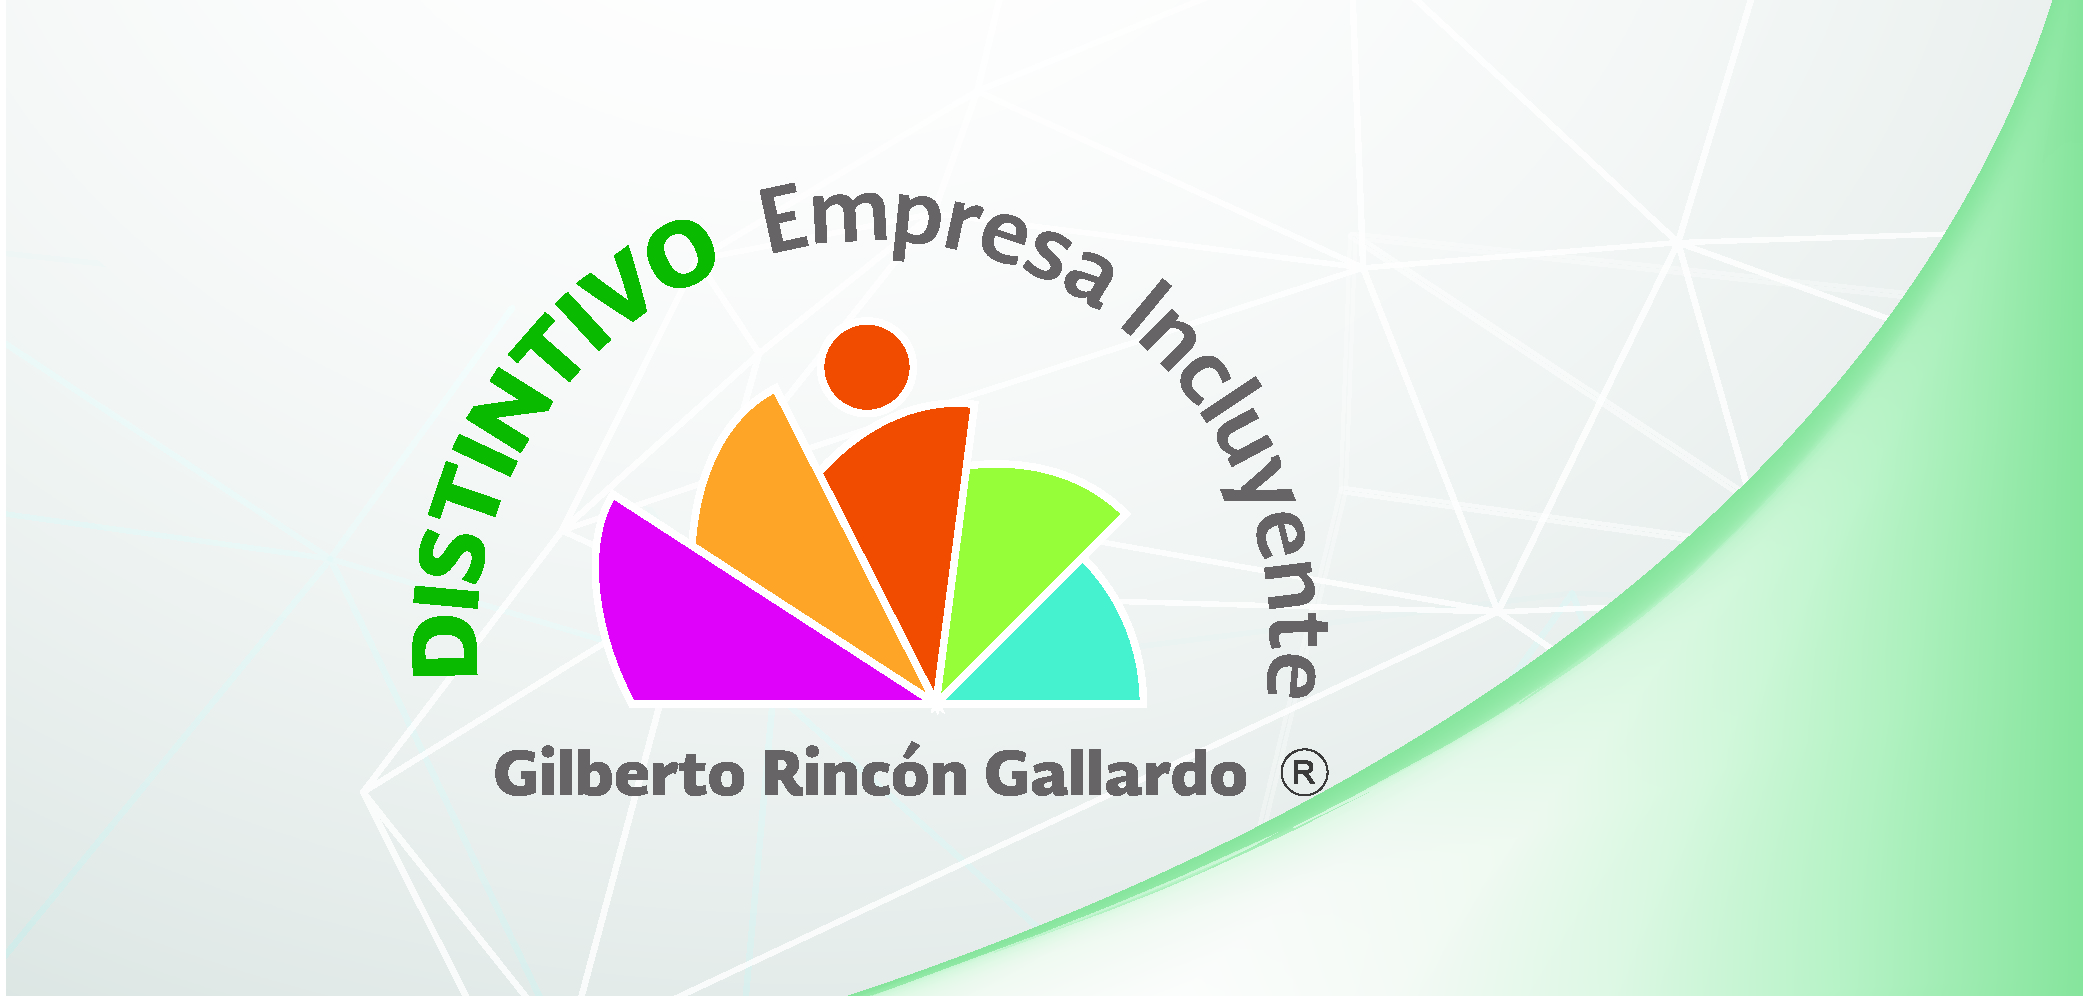 Logotipo del Distintivo Empresa Incluyente “Gilberto Rincón Gallardo” 2018